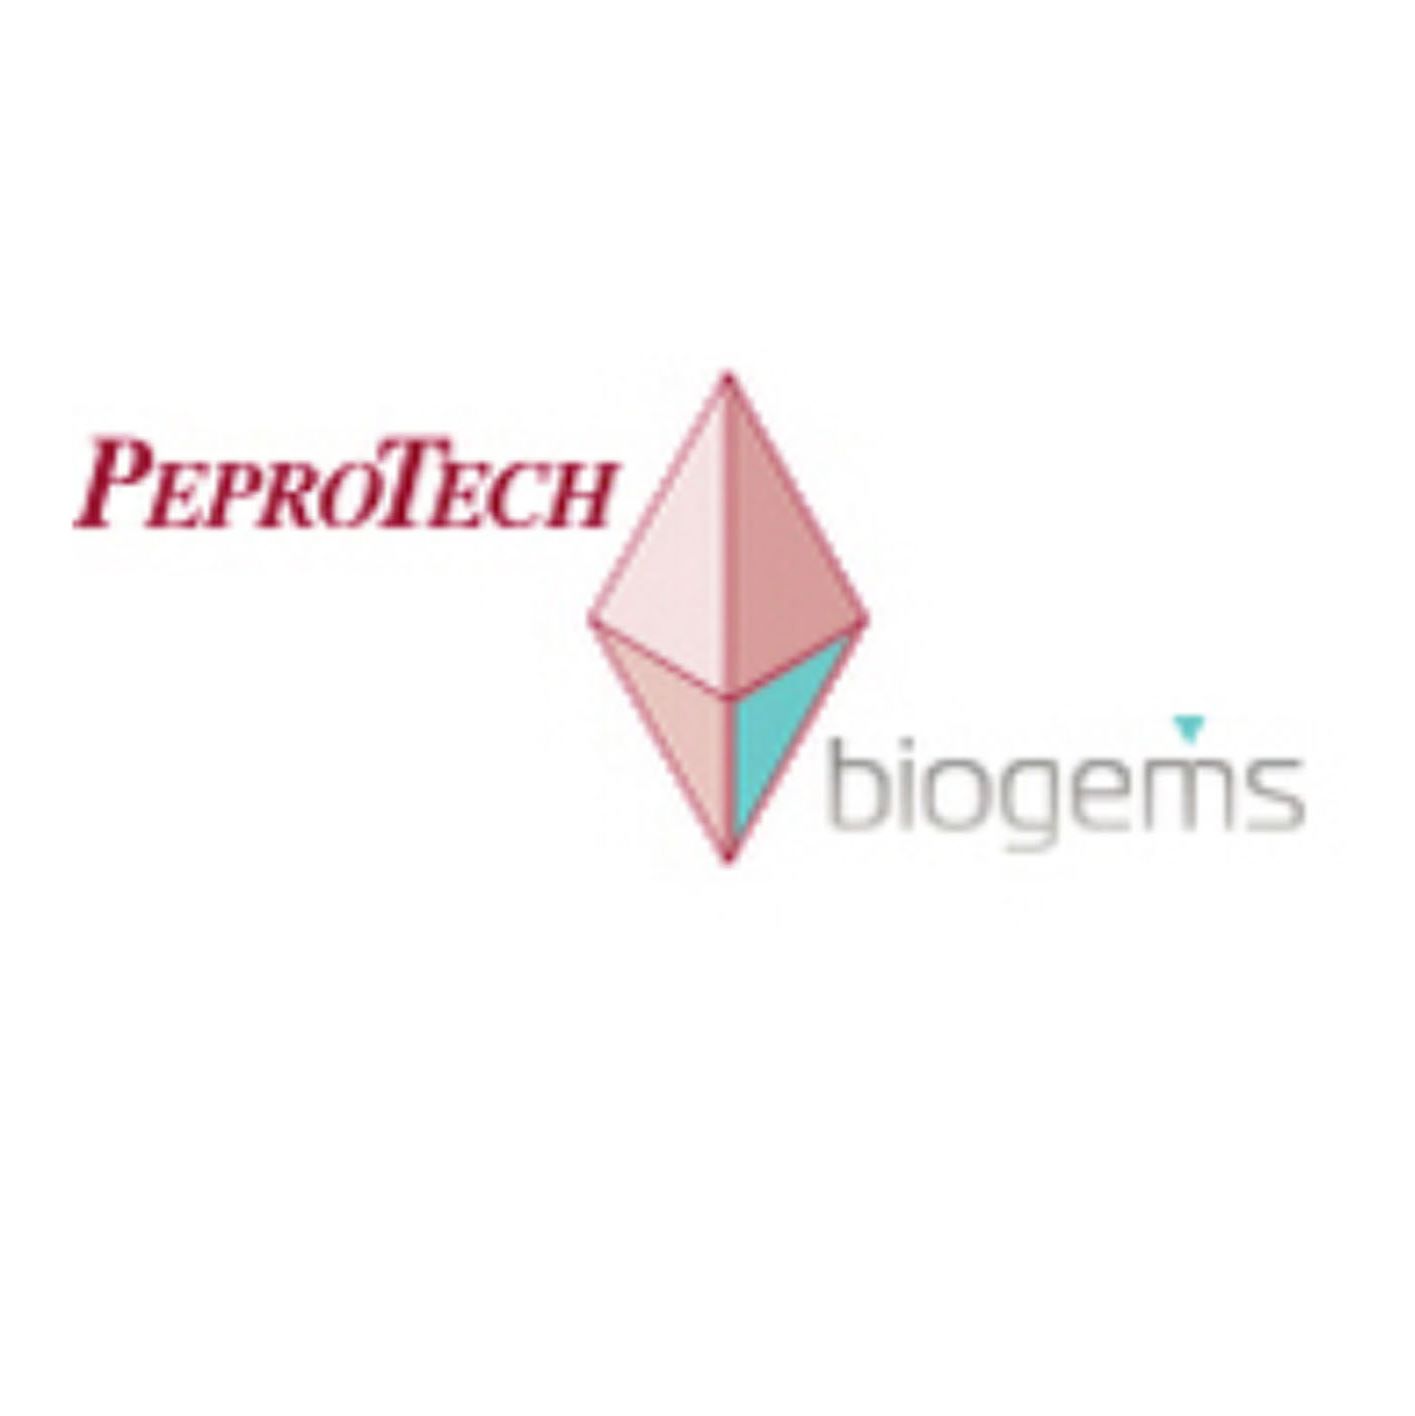 Peprotech(Biogems)  流式抗体、重组蛋白